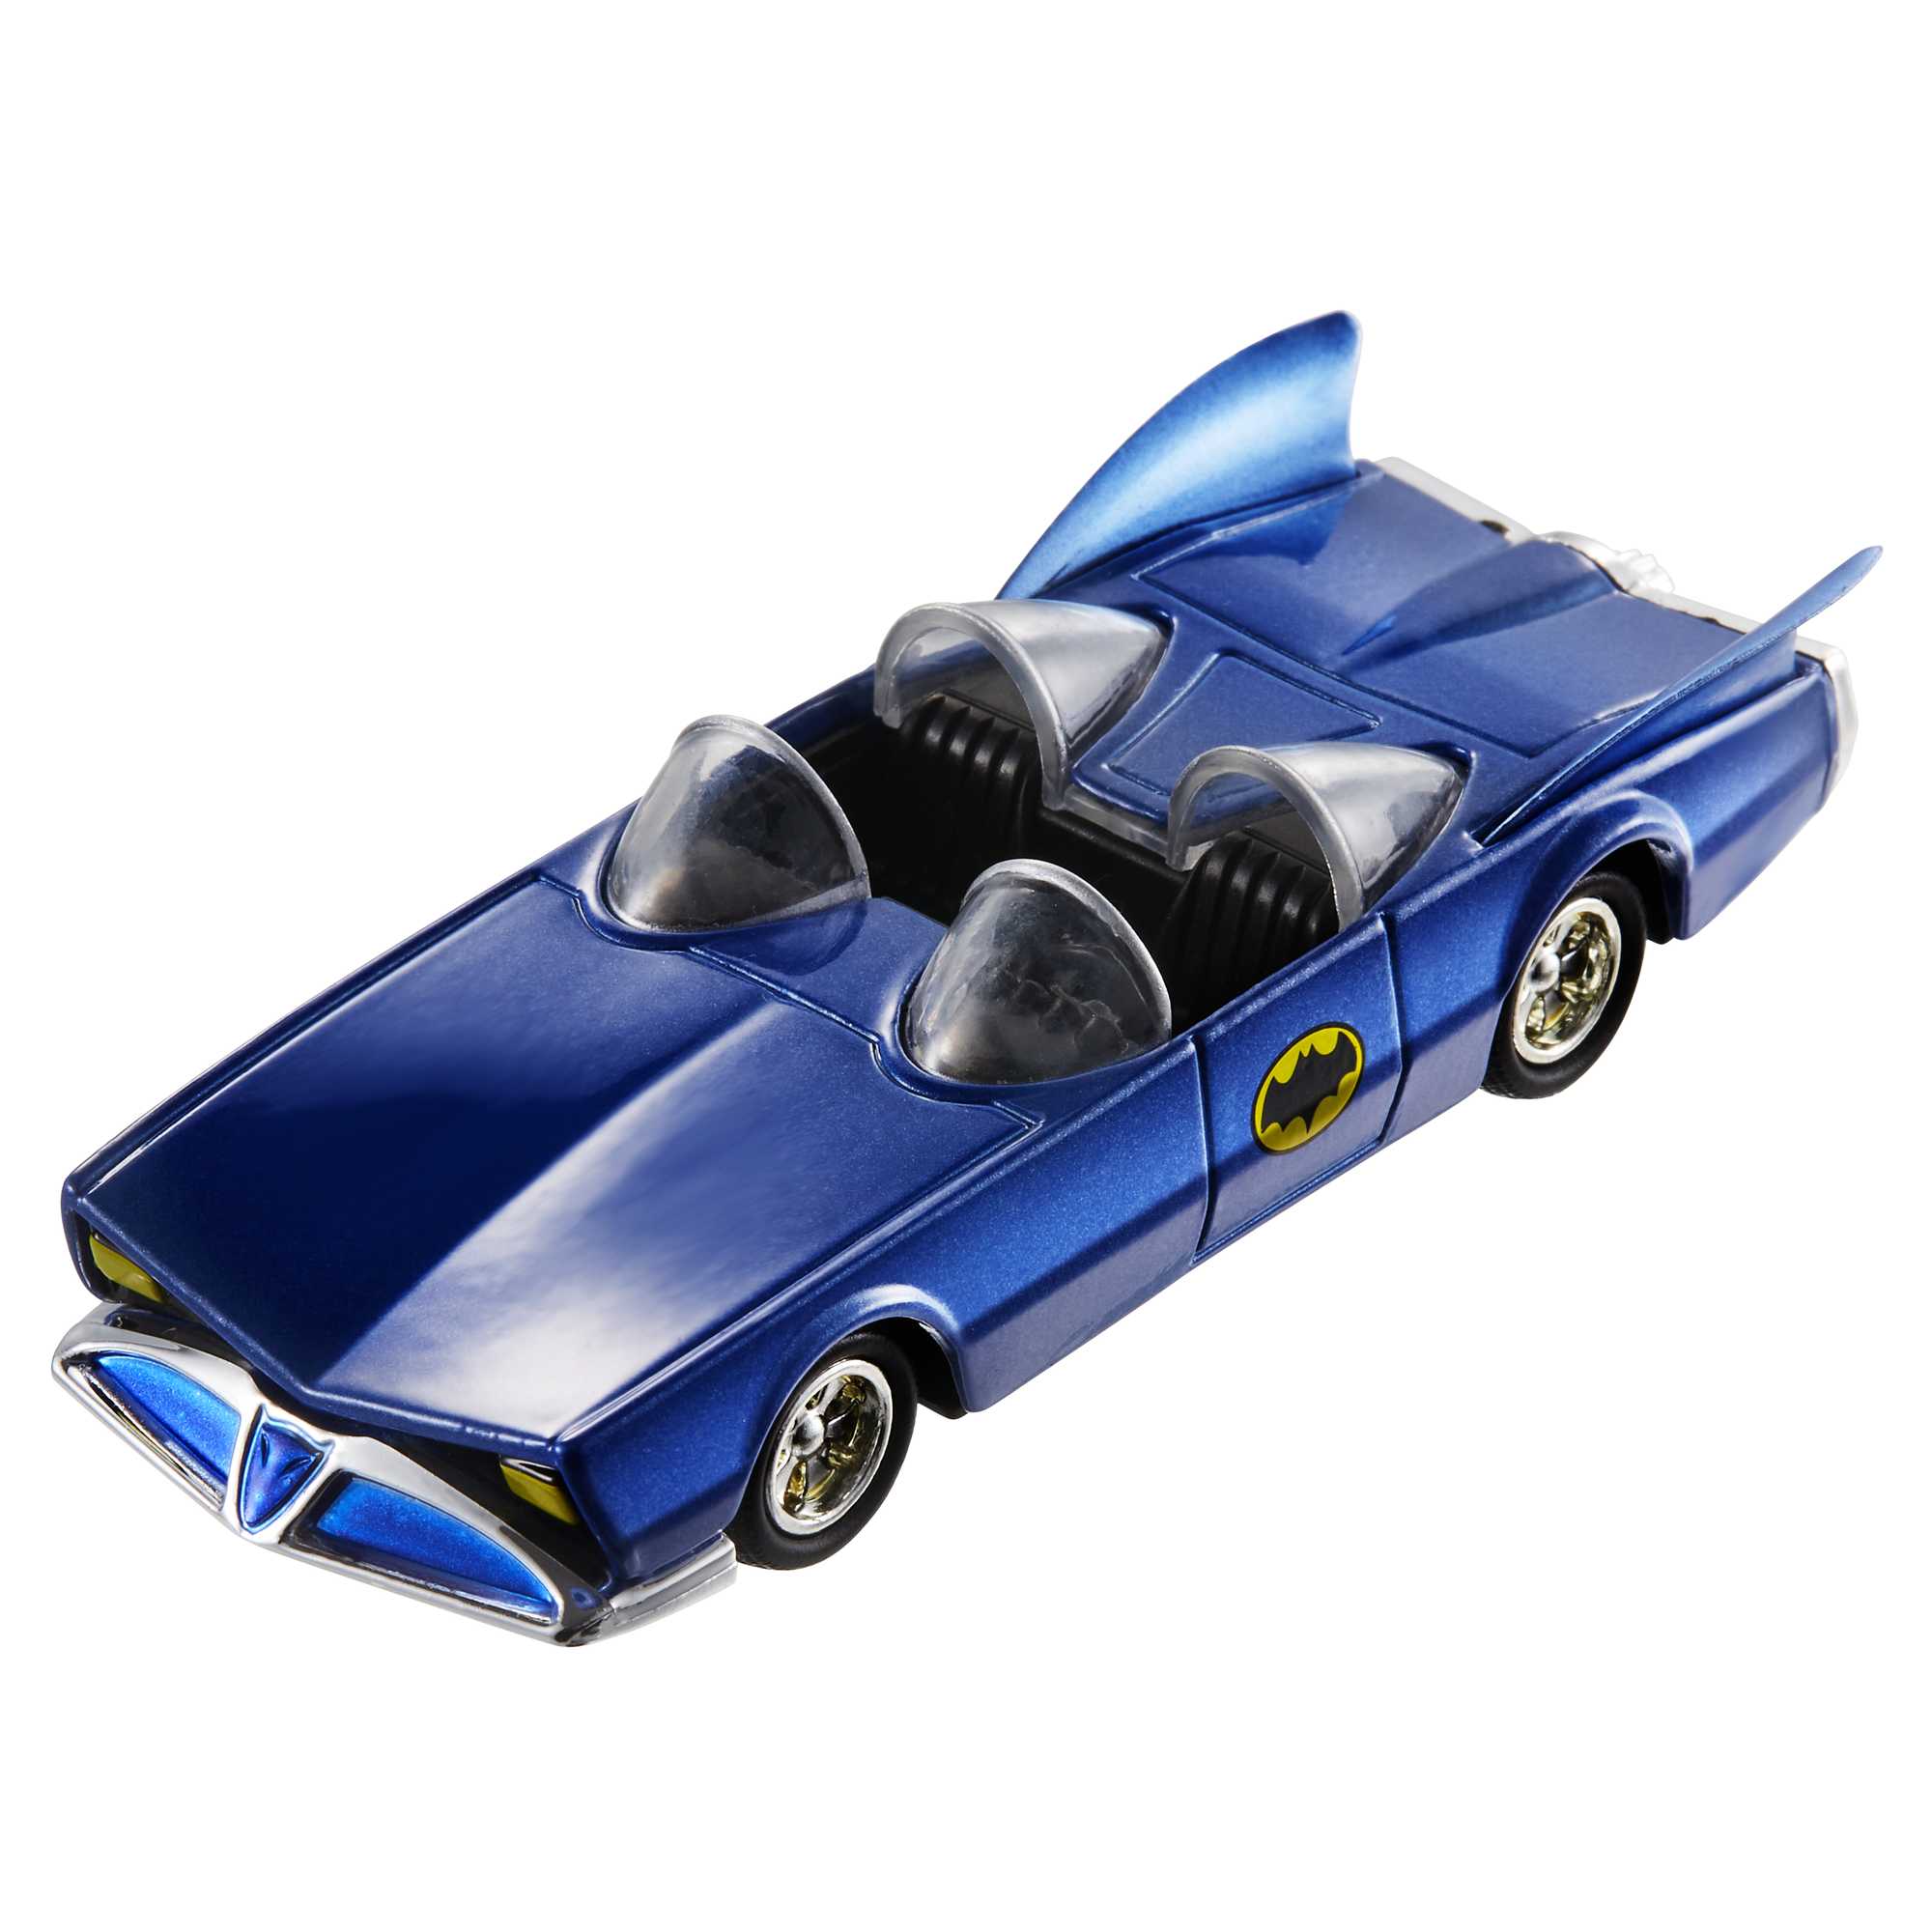 Hot Wheels® Batman™ 1:50th Scale Vehicles | MATTEL